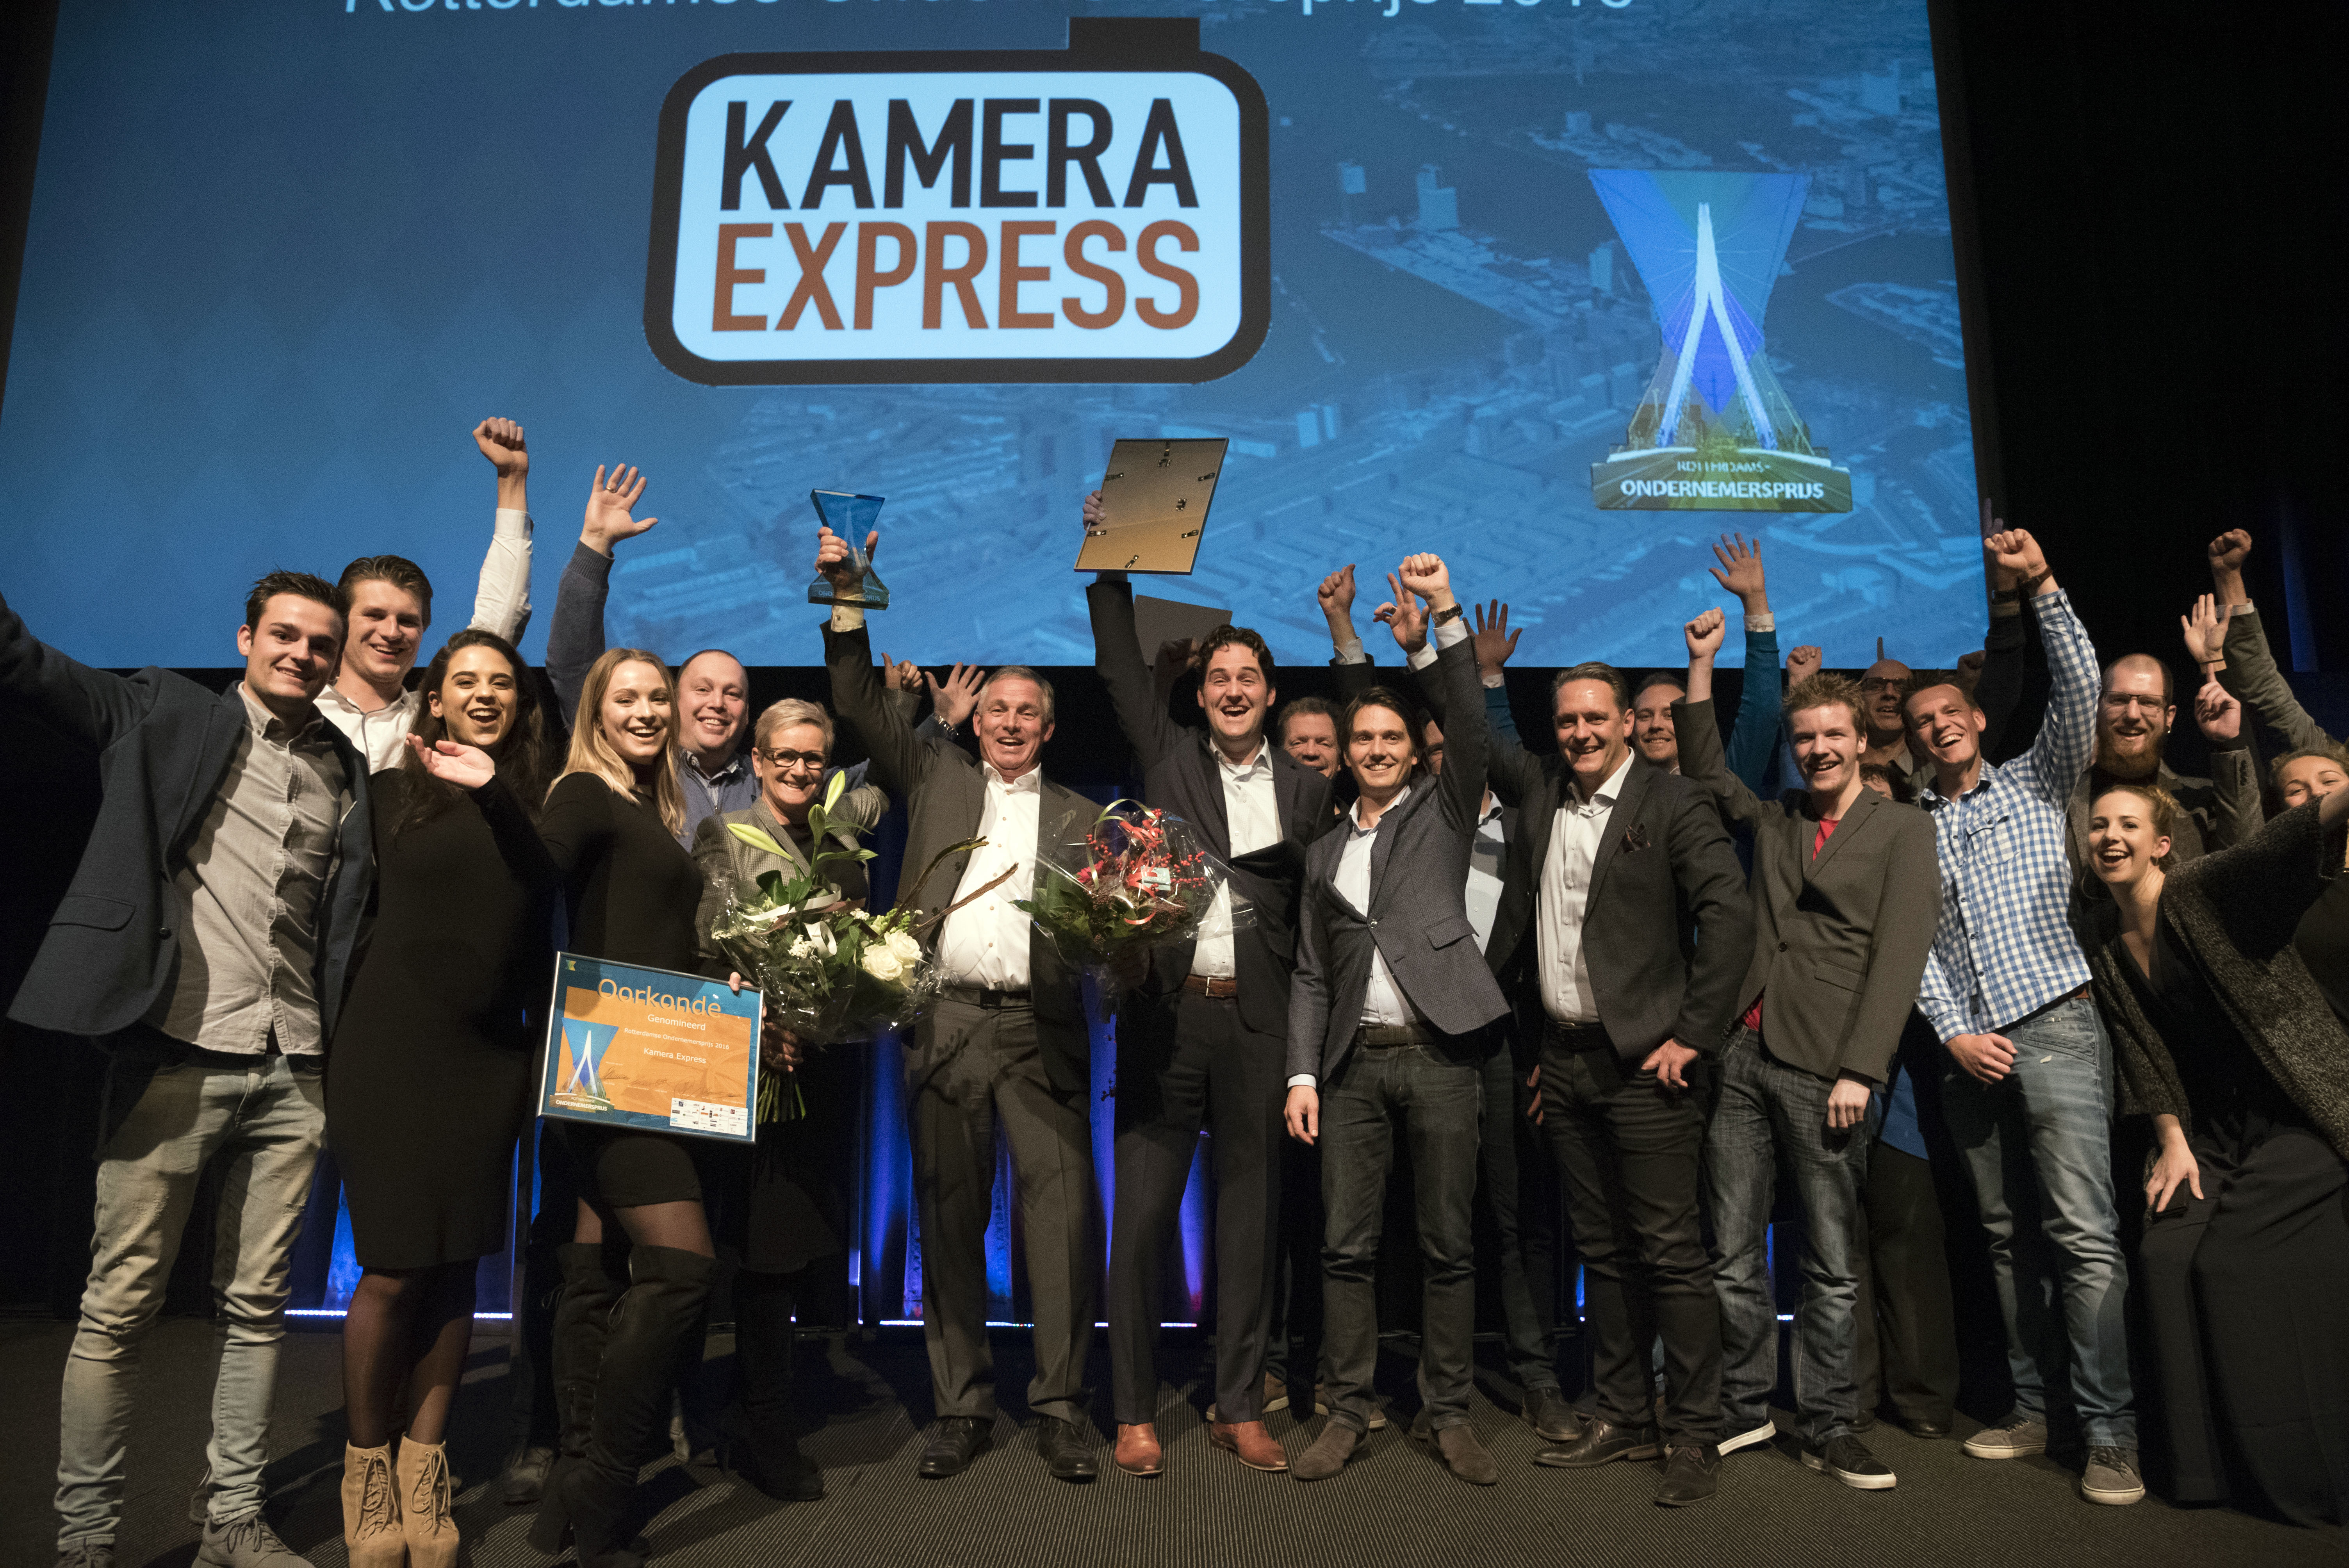 Kamera Express wint Rotterdamse ondernemersprijs ...
